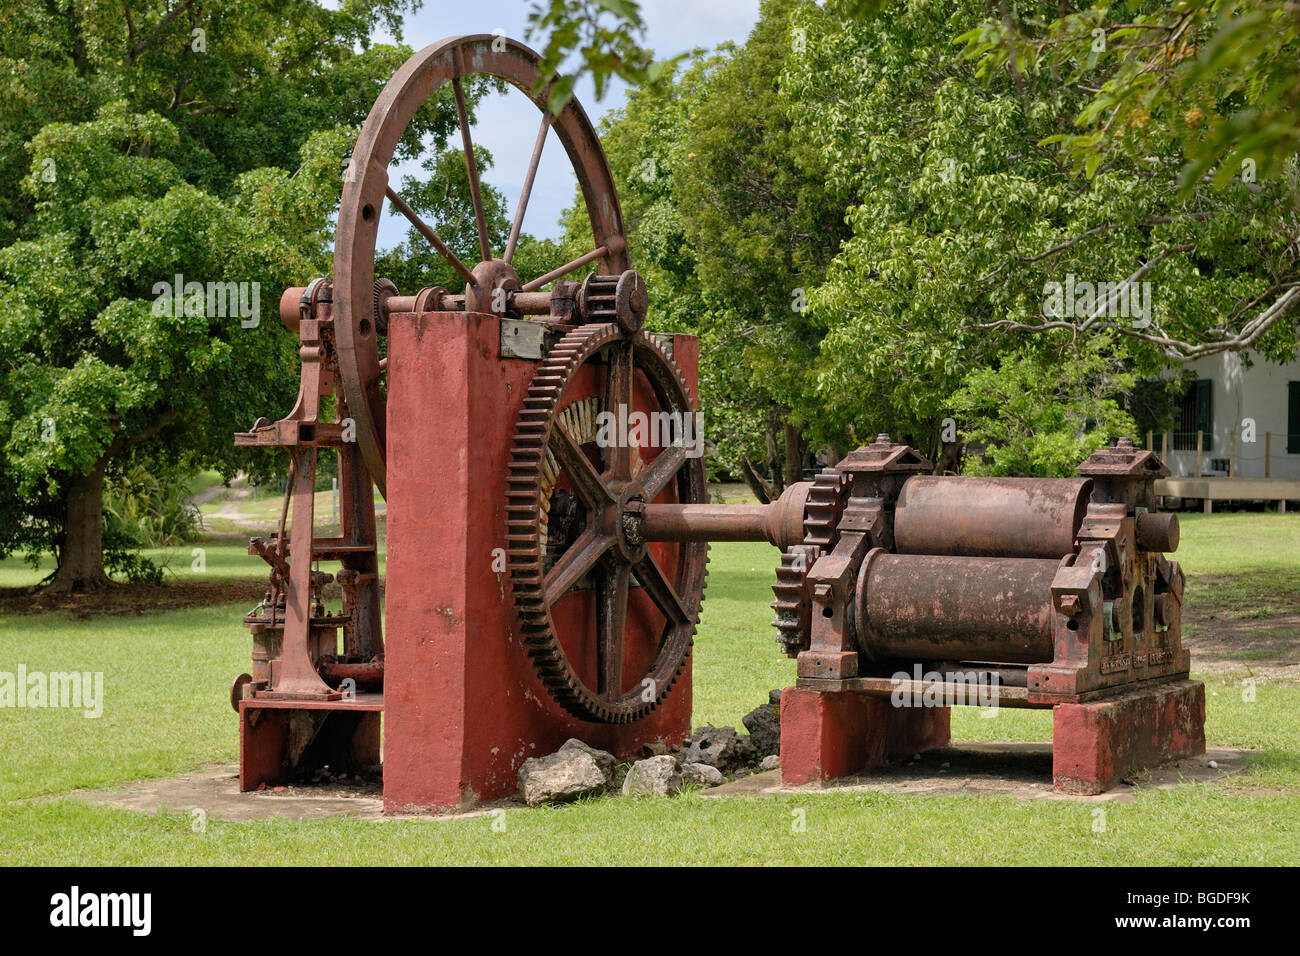 Historical sugar cane press, Whim Estate Museum, St. Croix island, U.S. Virgin Islands, United States Stock Photo